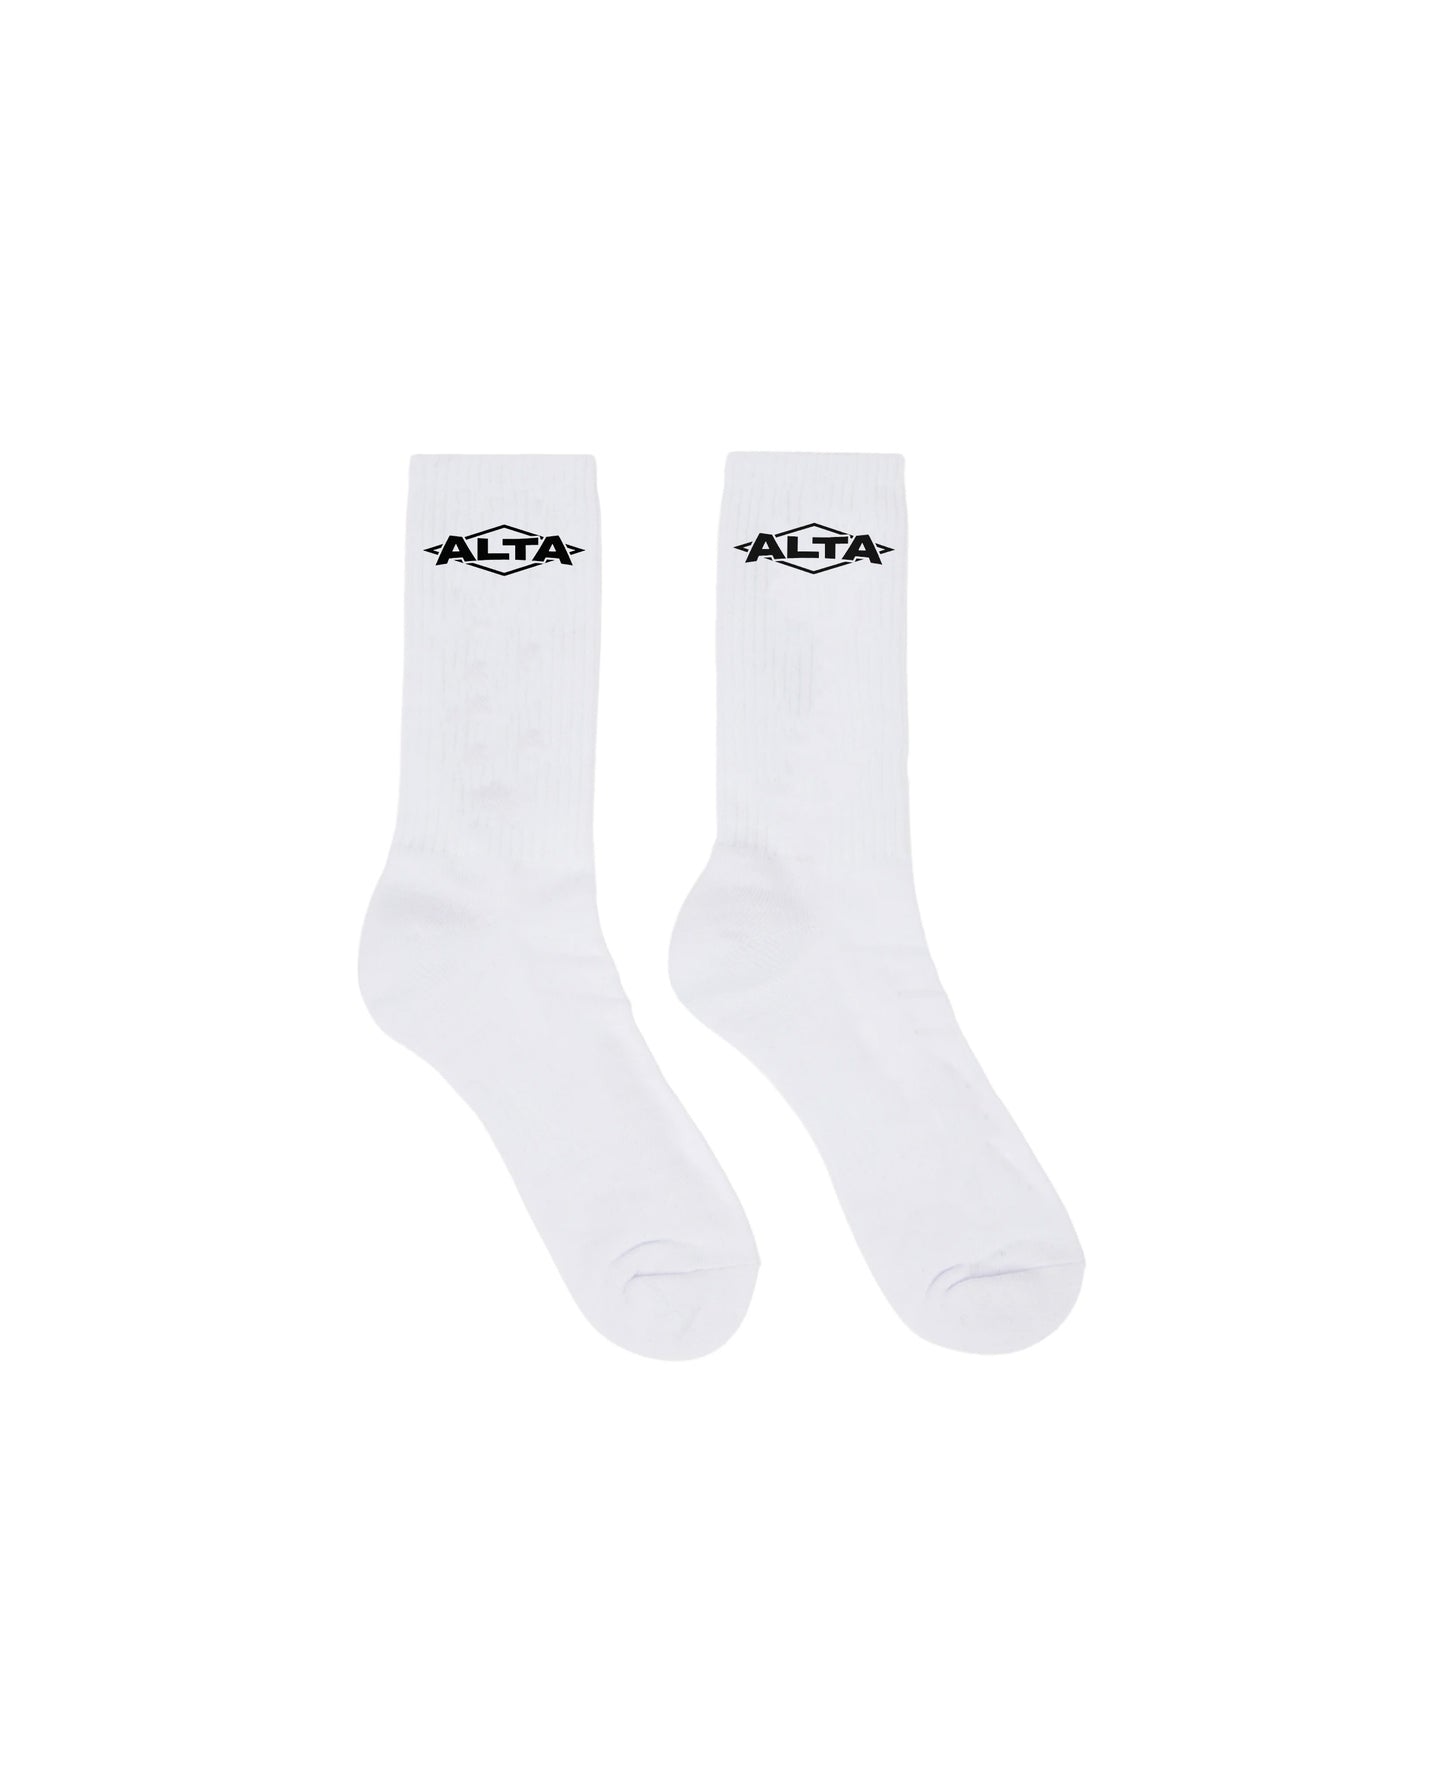 ALTA Socks